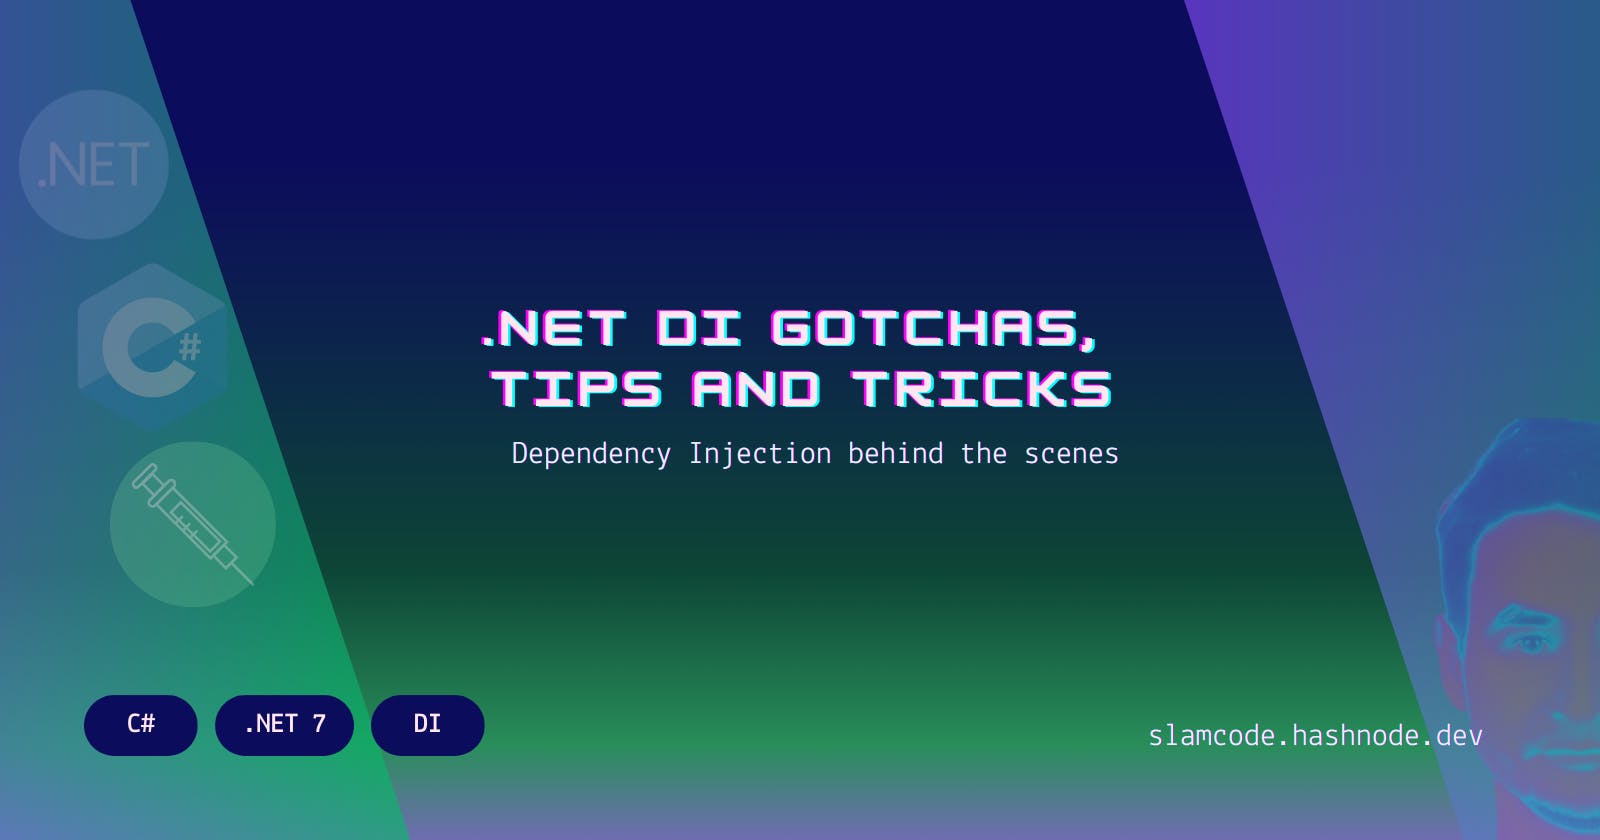 .Net DI gotchas, tips and tricks